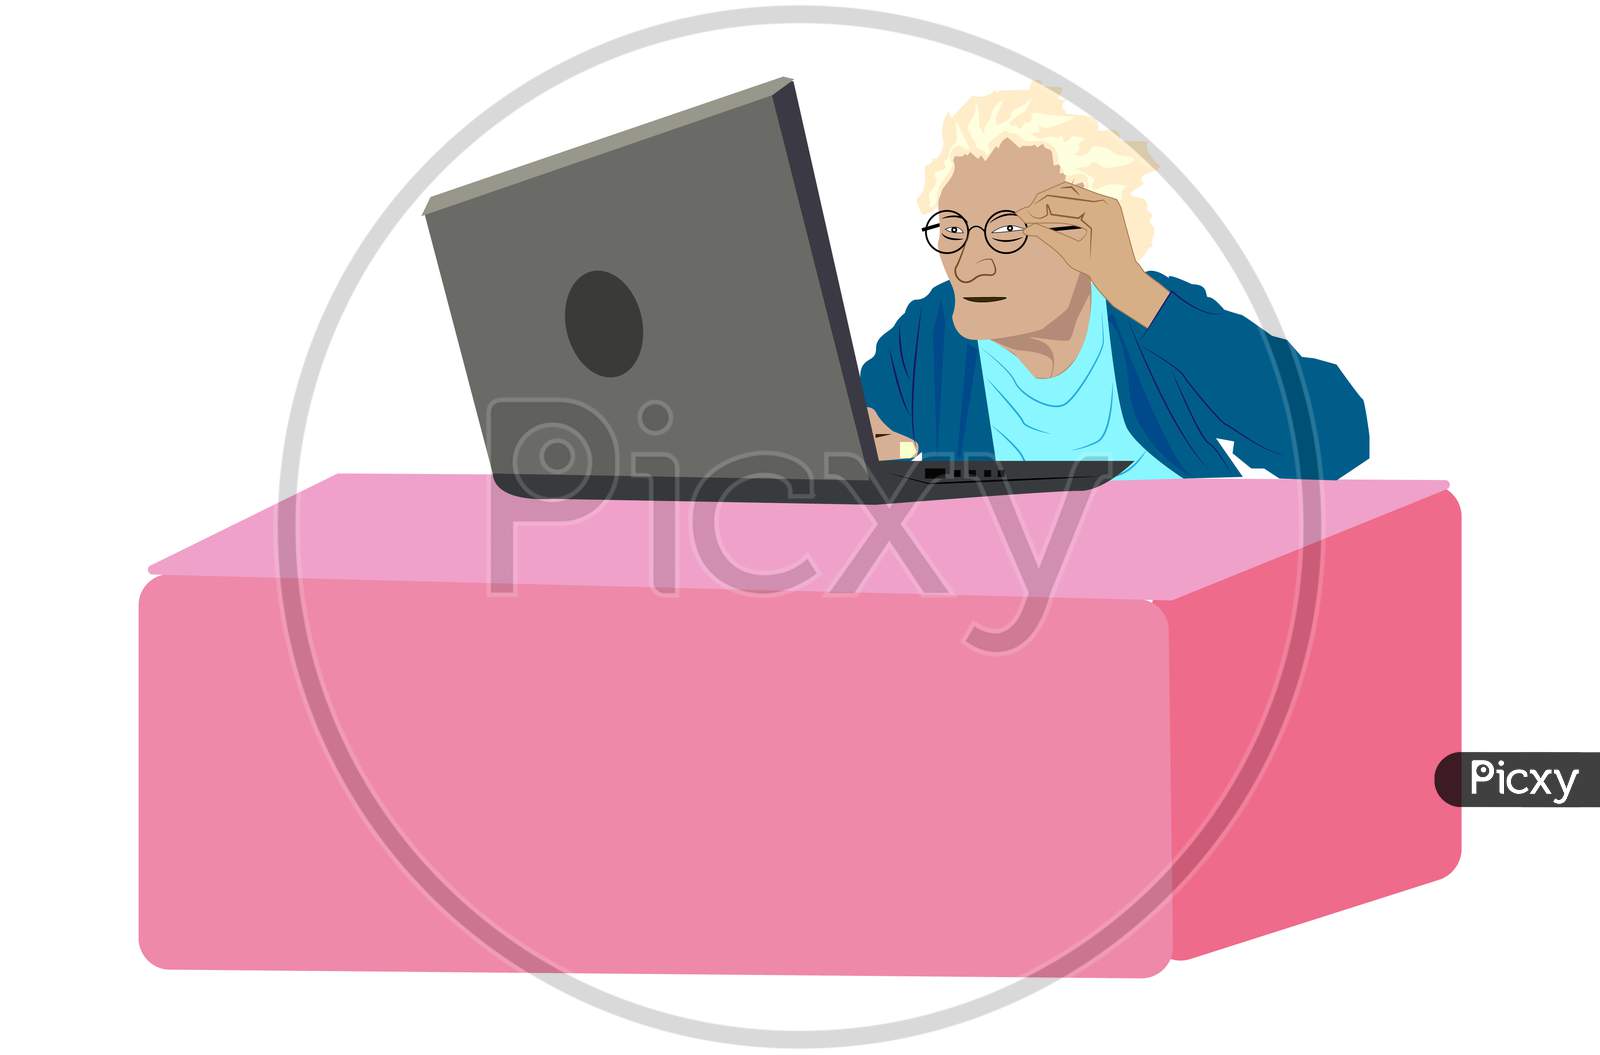 Indian Village Old People Computer Education Awareness illustration image